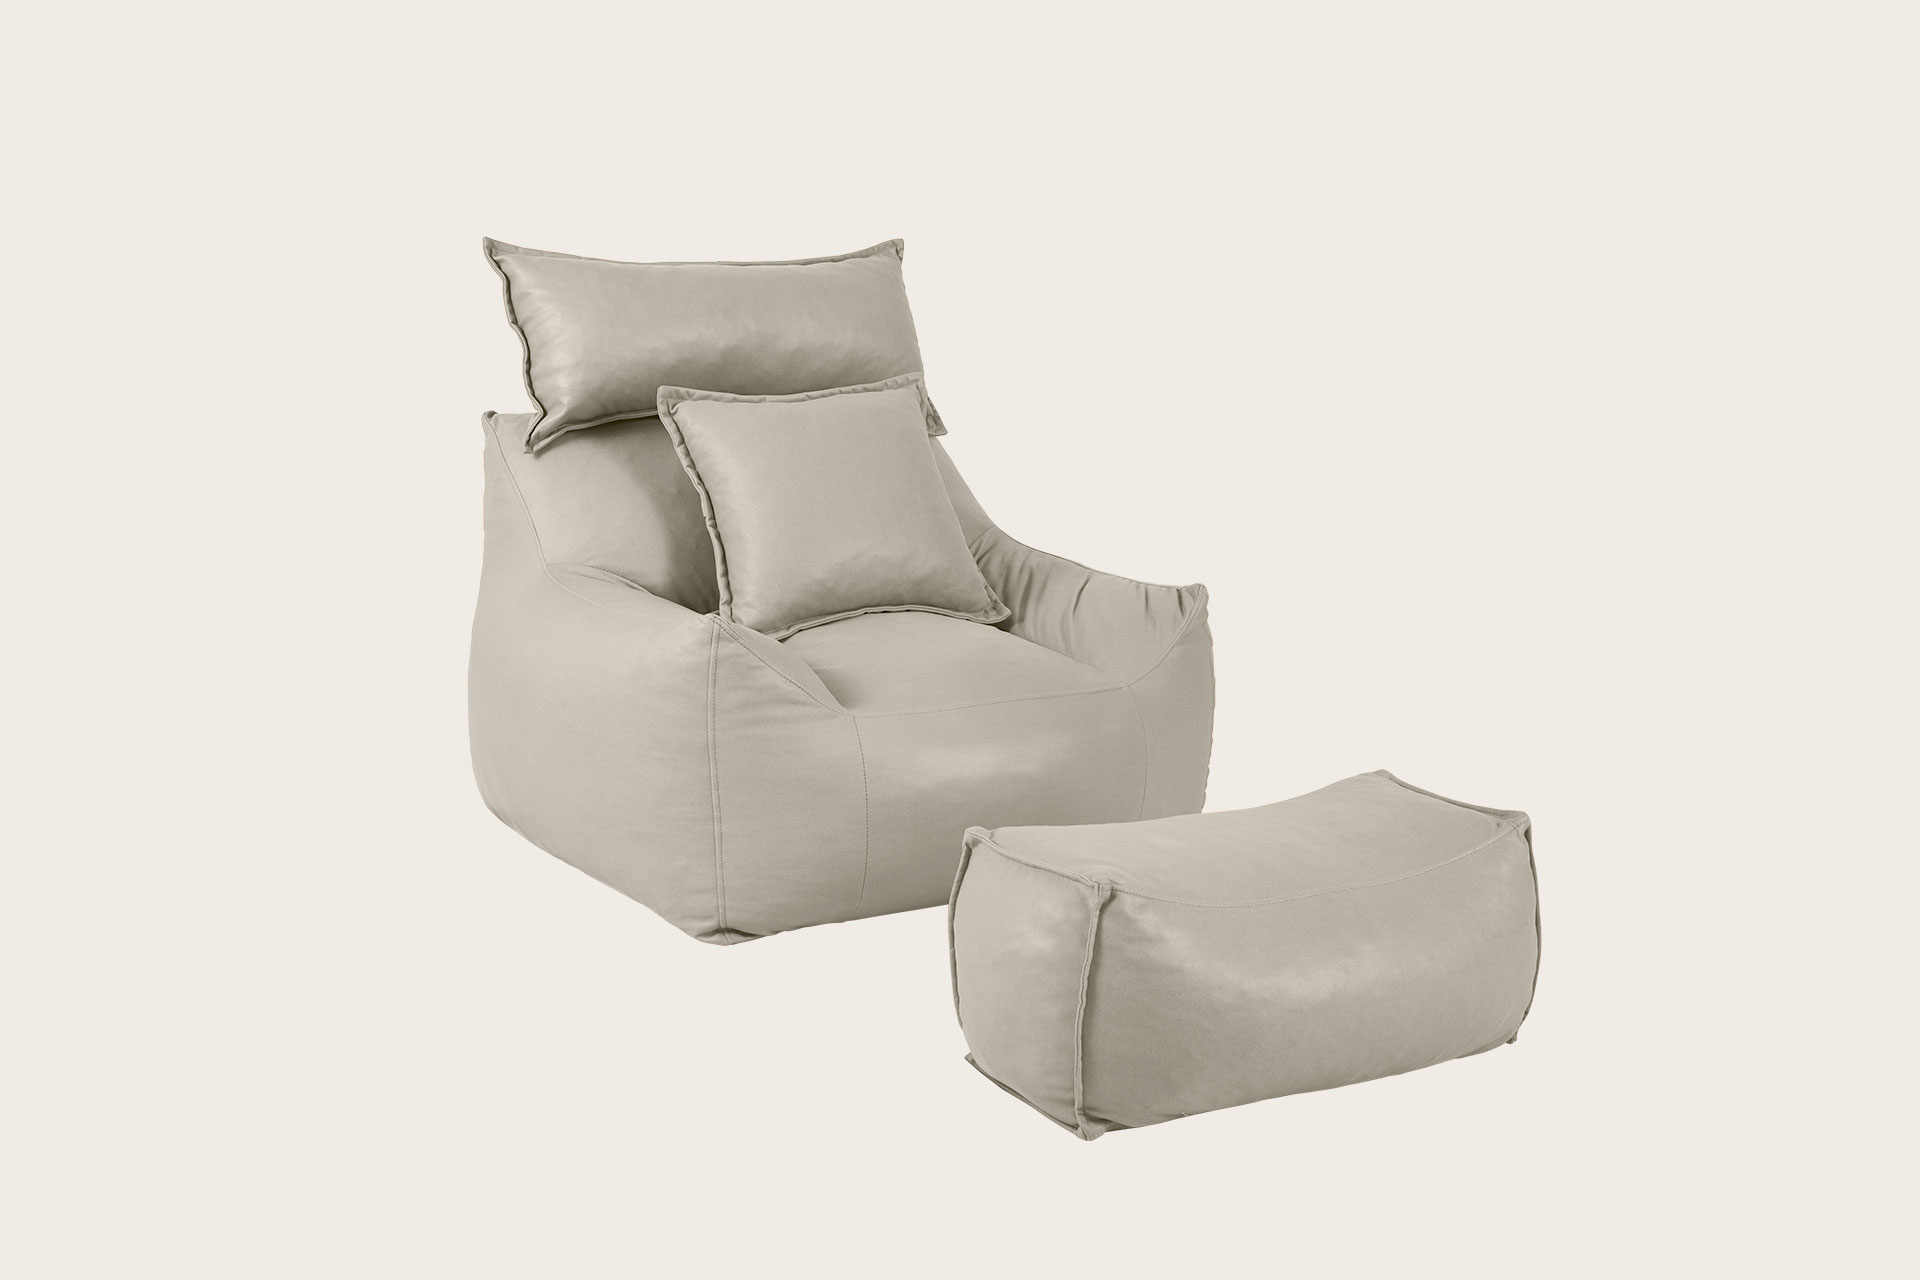 Lazy Sofa -Pastel Gray (W95 x D90+25 x H85cm)  Original price: 3380